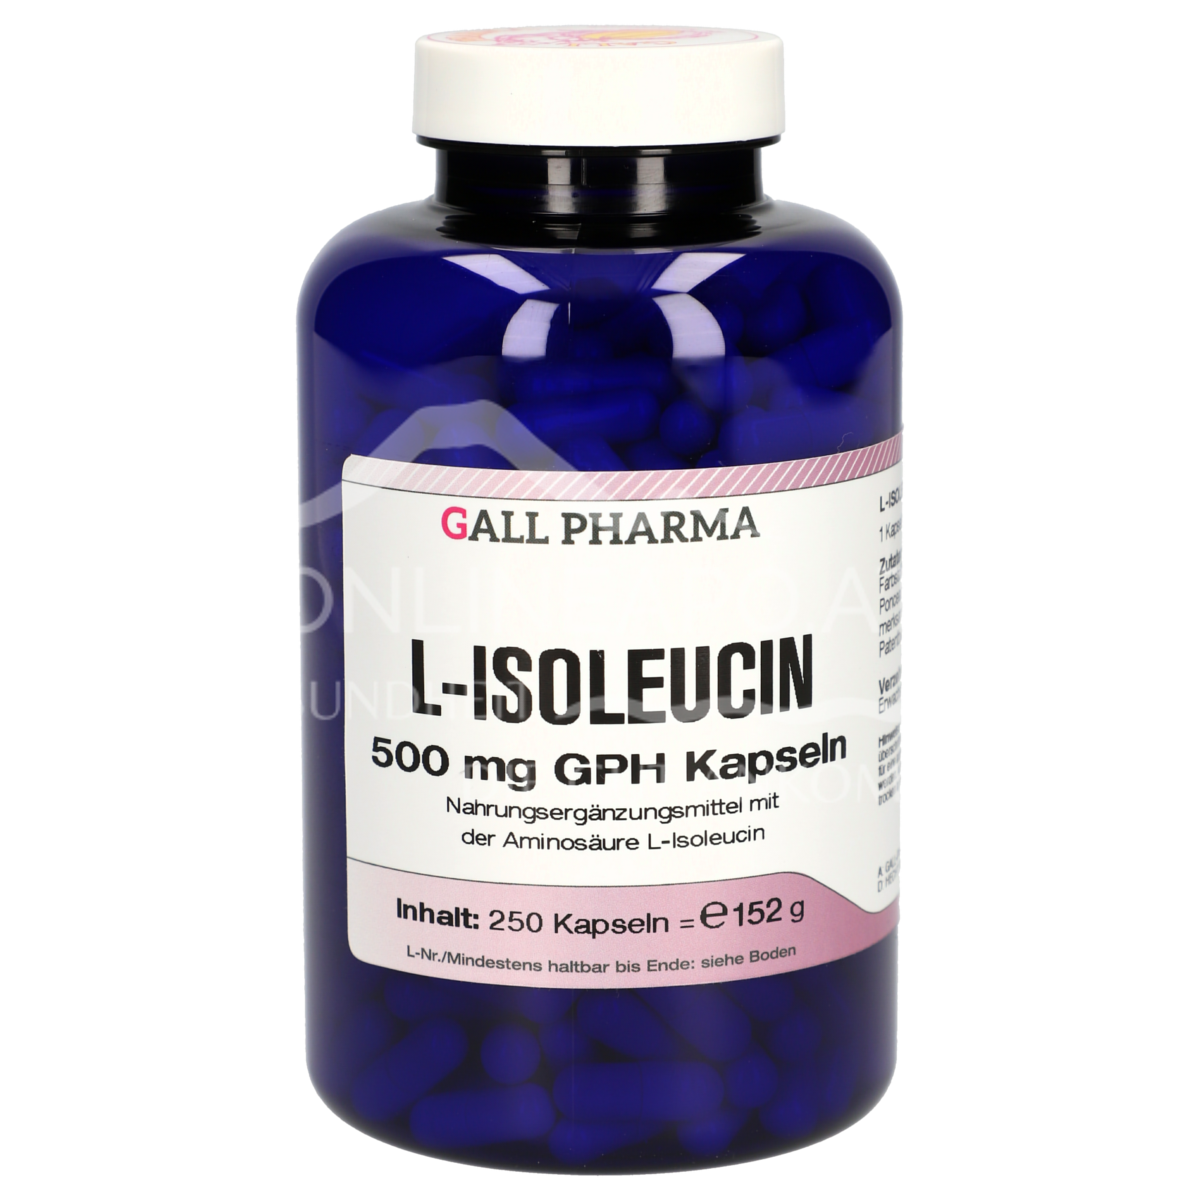 Gall Pharma L-Isoleucin 500 mg Kapseln